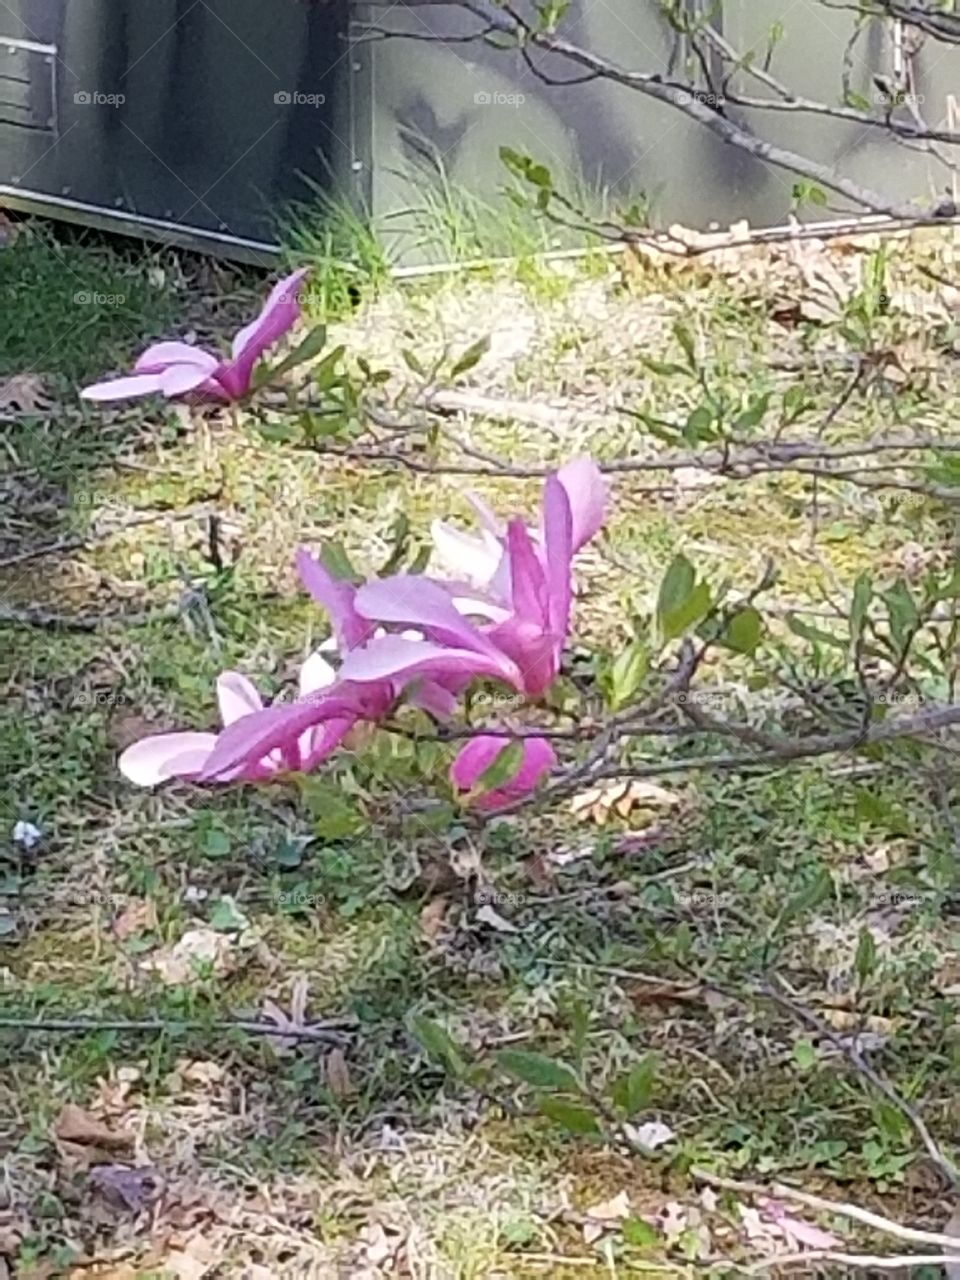 Pink Easter egg hidden on a magnolia tree